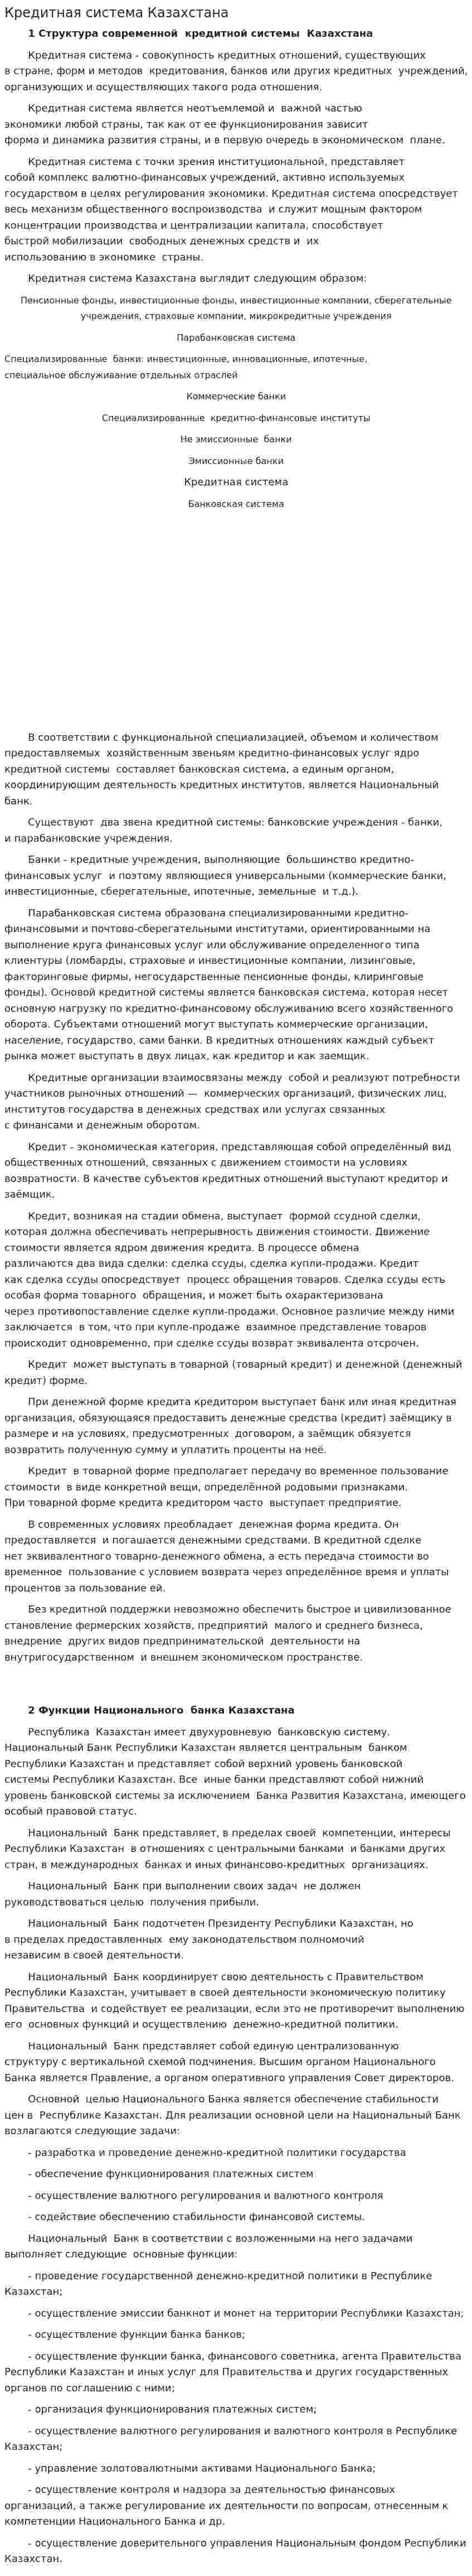 Кредитная система Казахстана